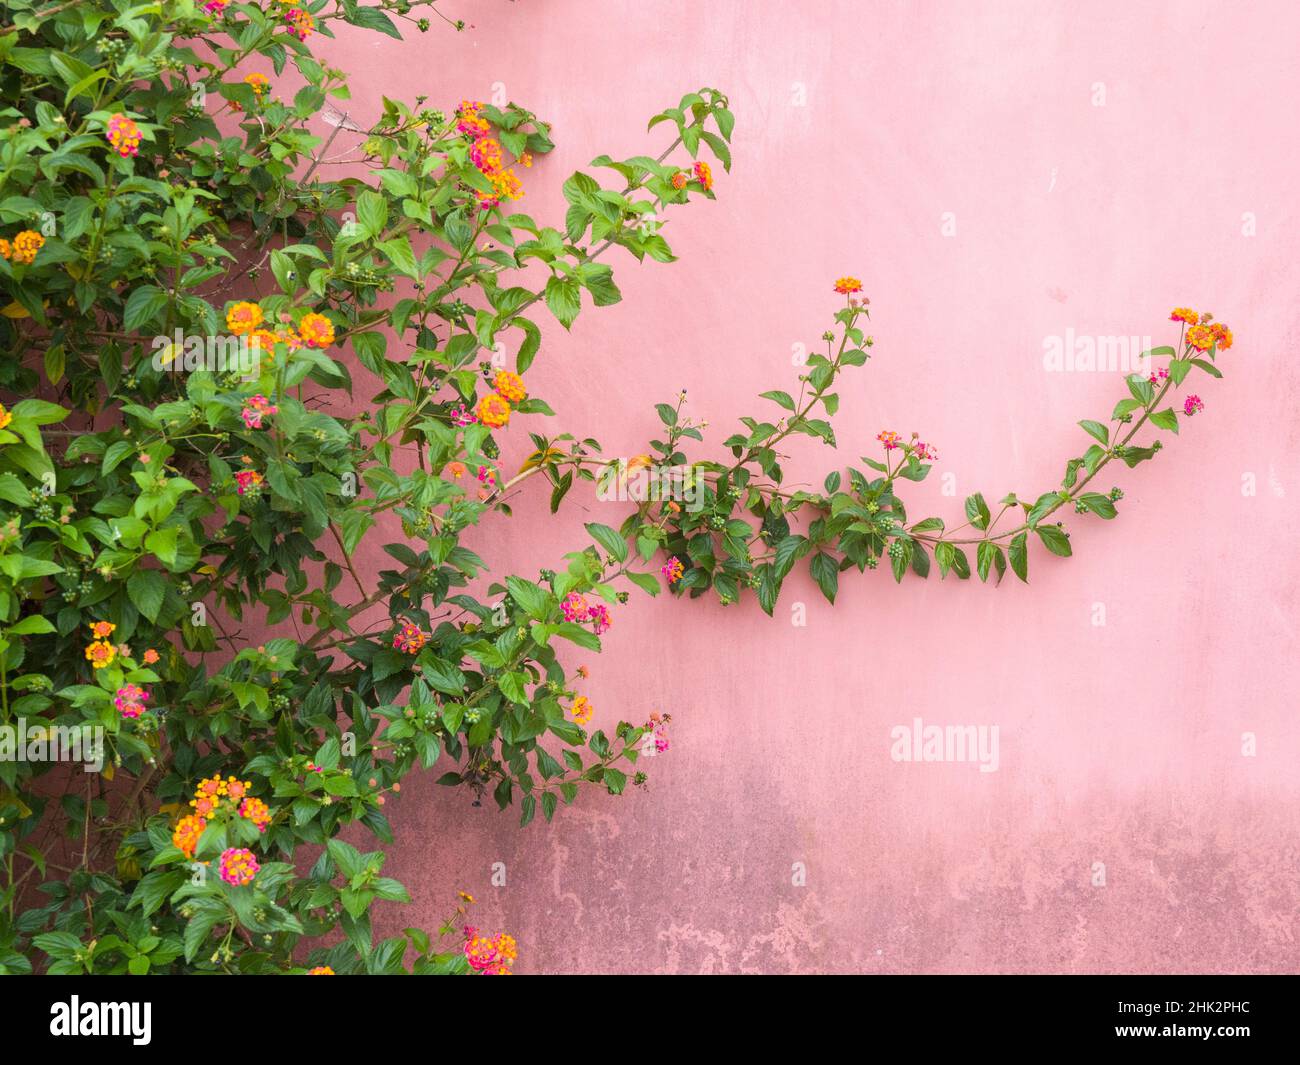 Portugal, Obidos. Colorida vid de lantana creciendo contra una pared rosa. Foto de stock